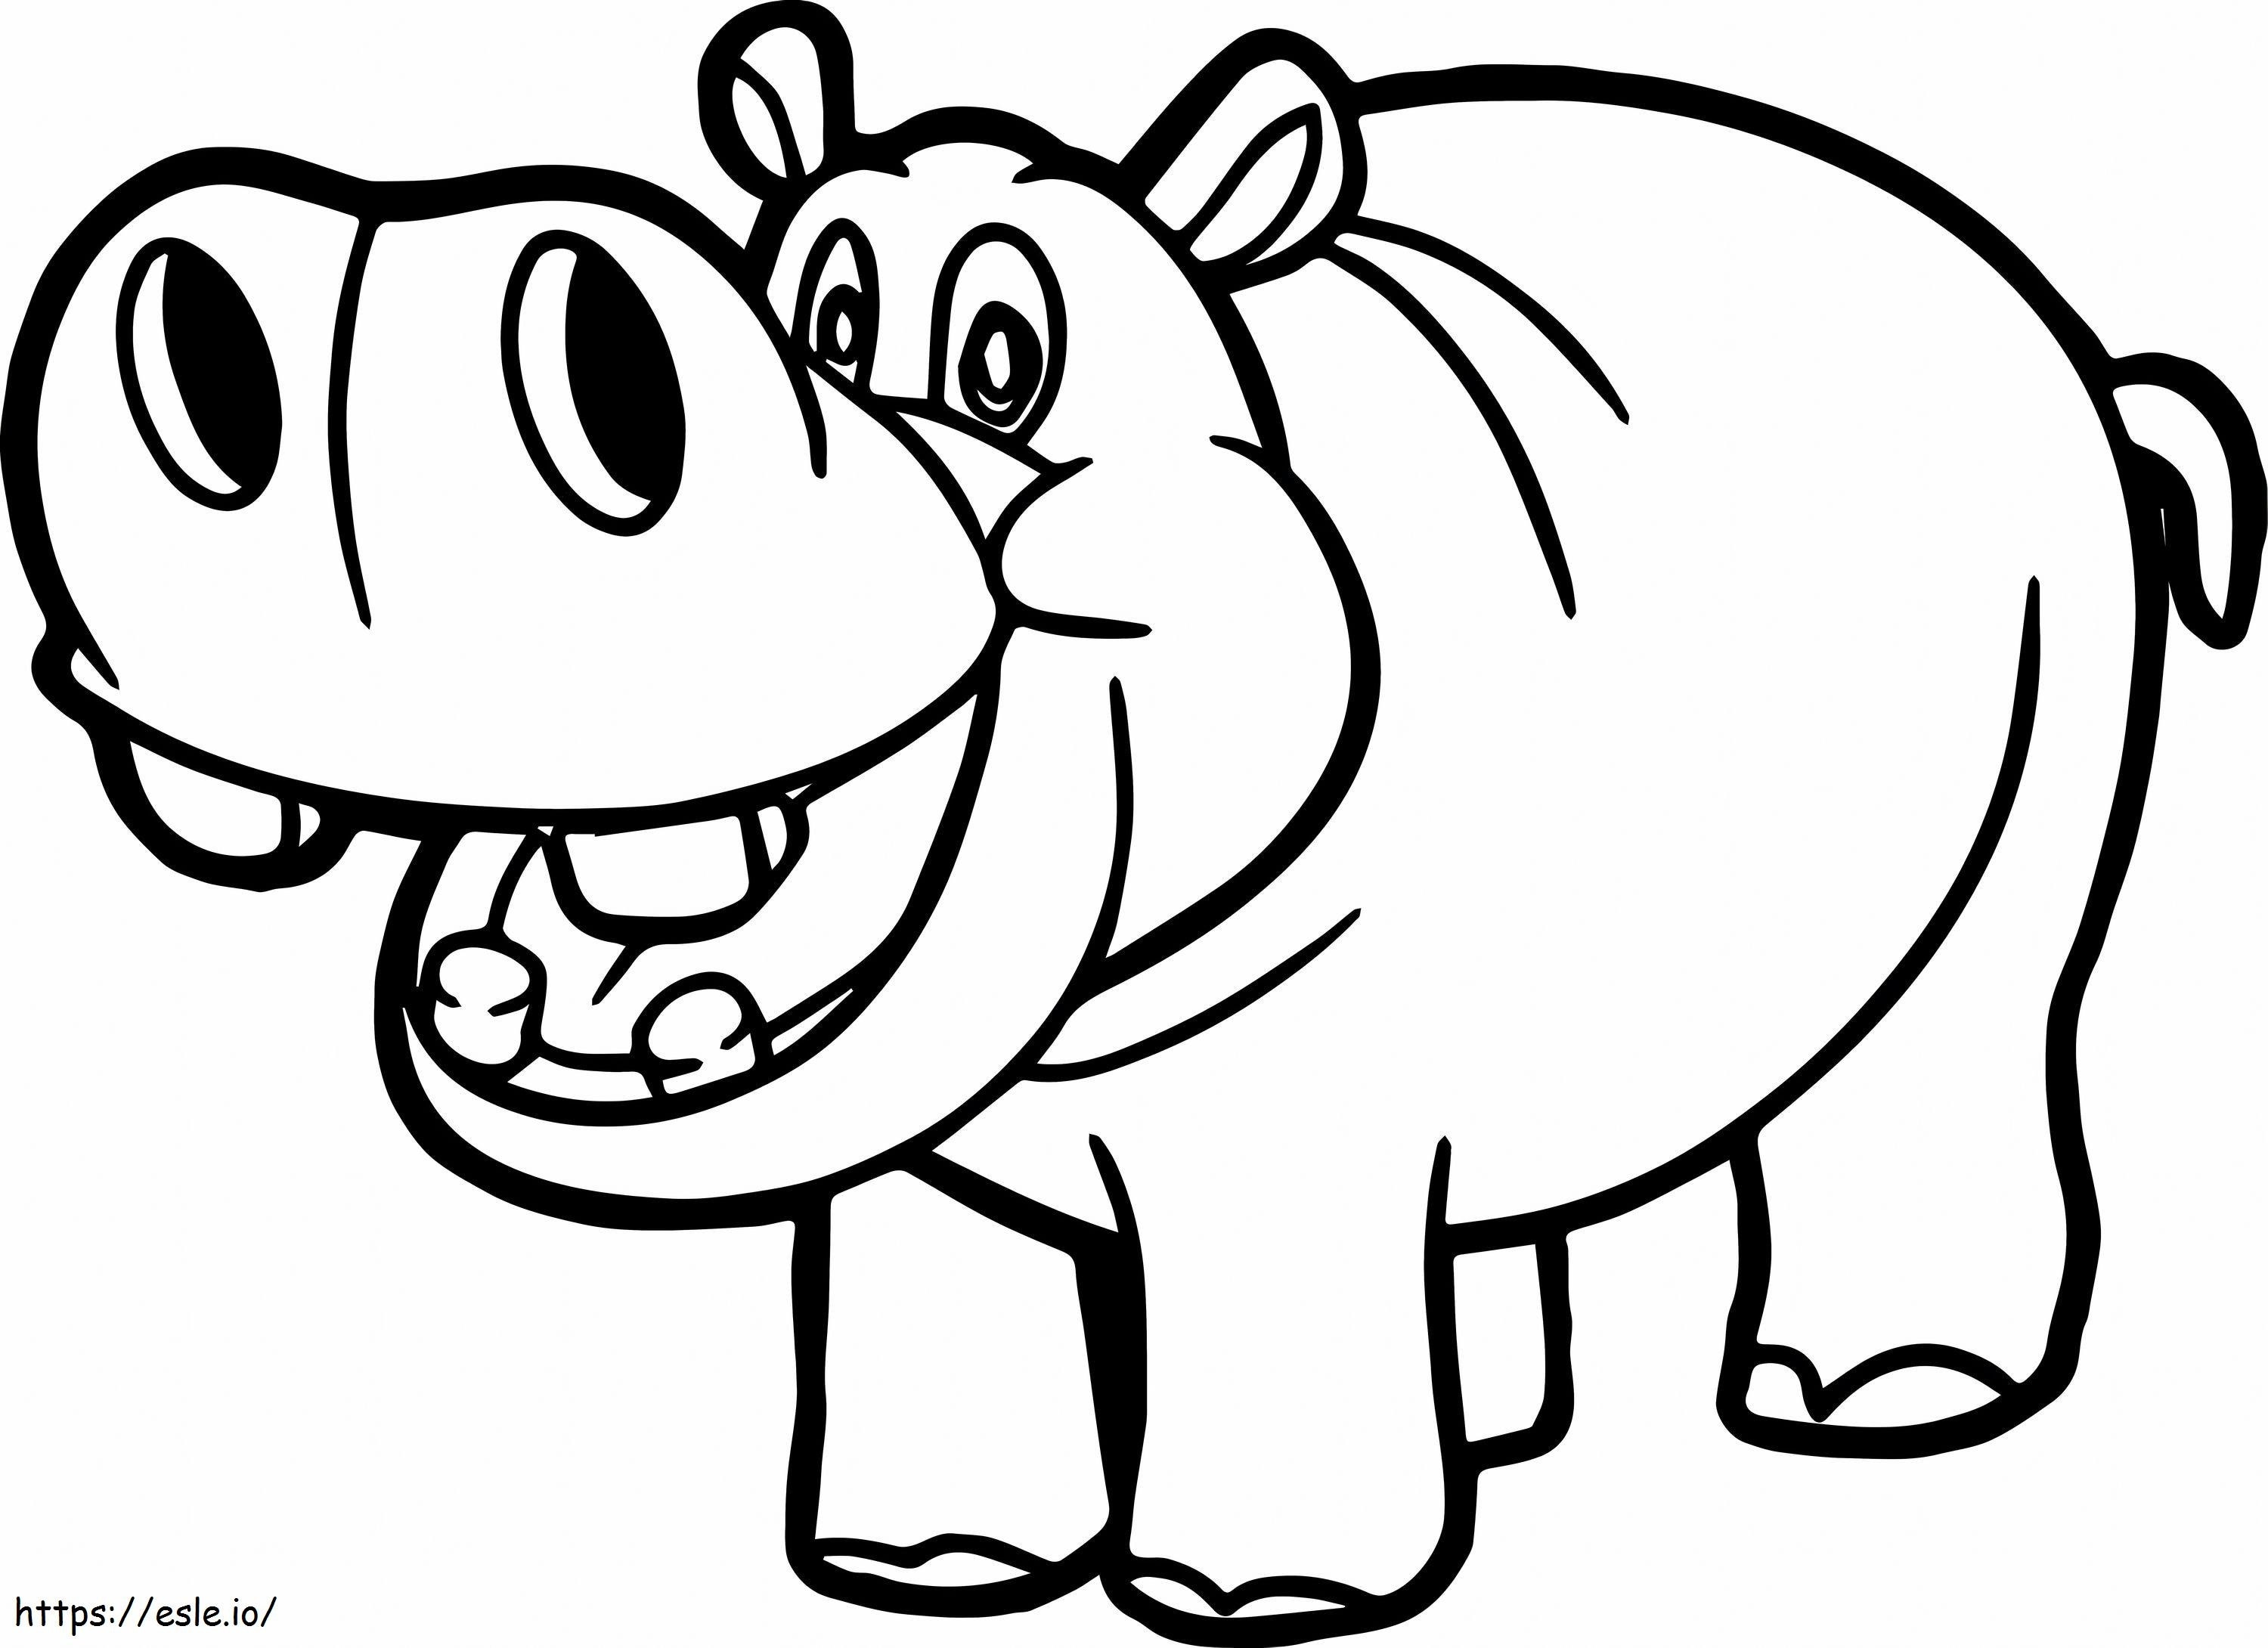 1548128583 Hippopotamuses Hippopotamuses Luxury Outline Drawing at Getdrawings Of Hippopotamuses de colorat